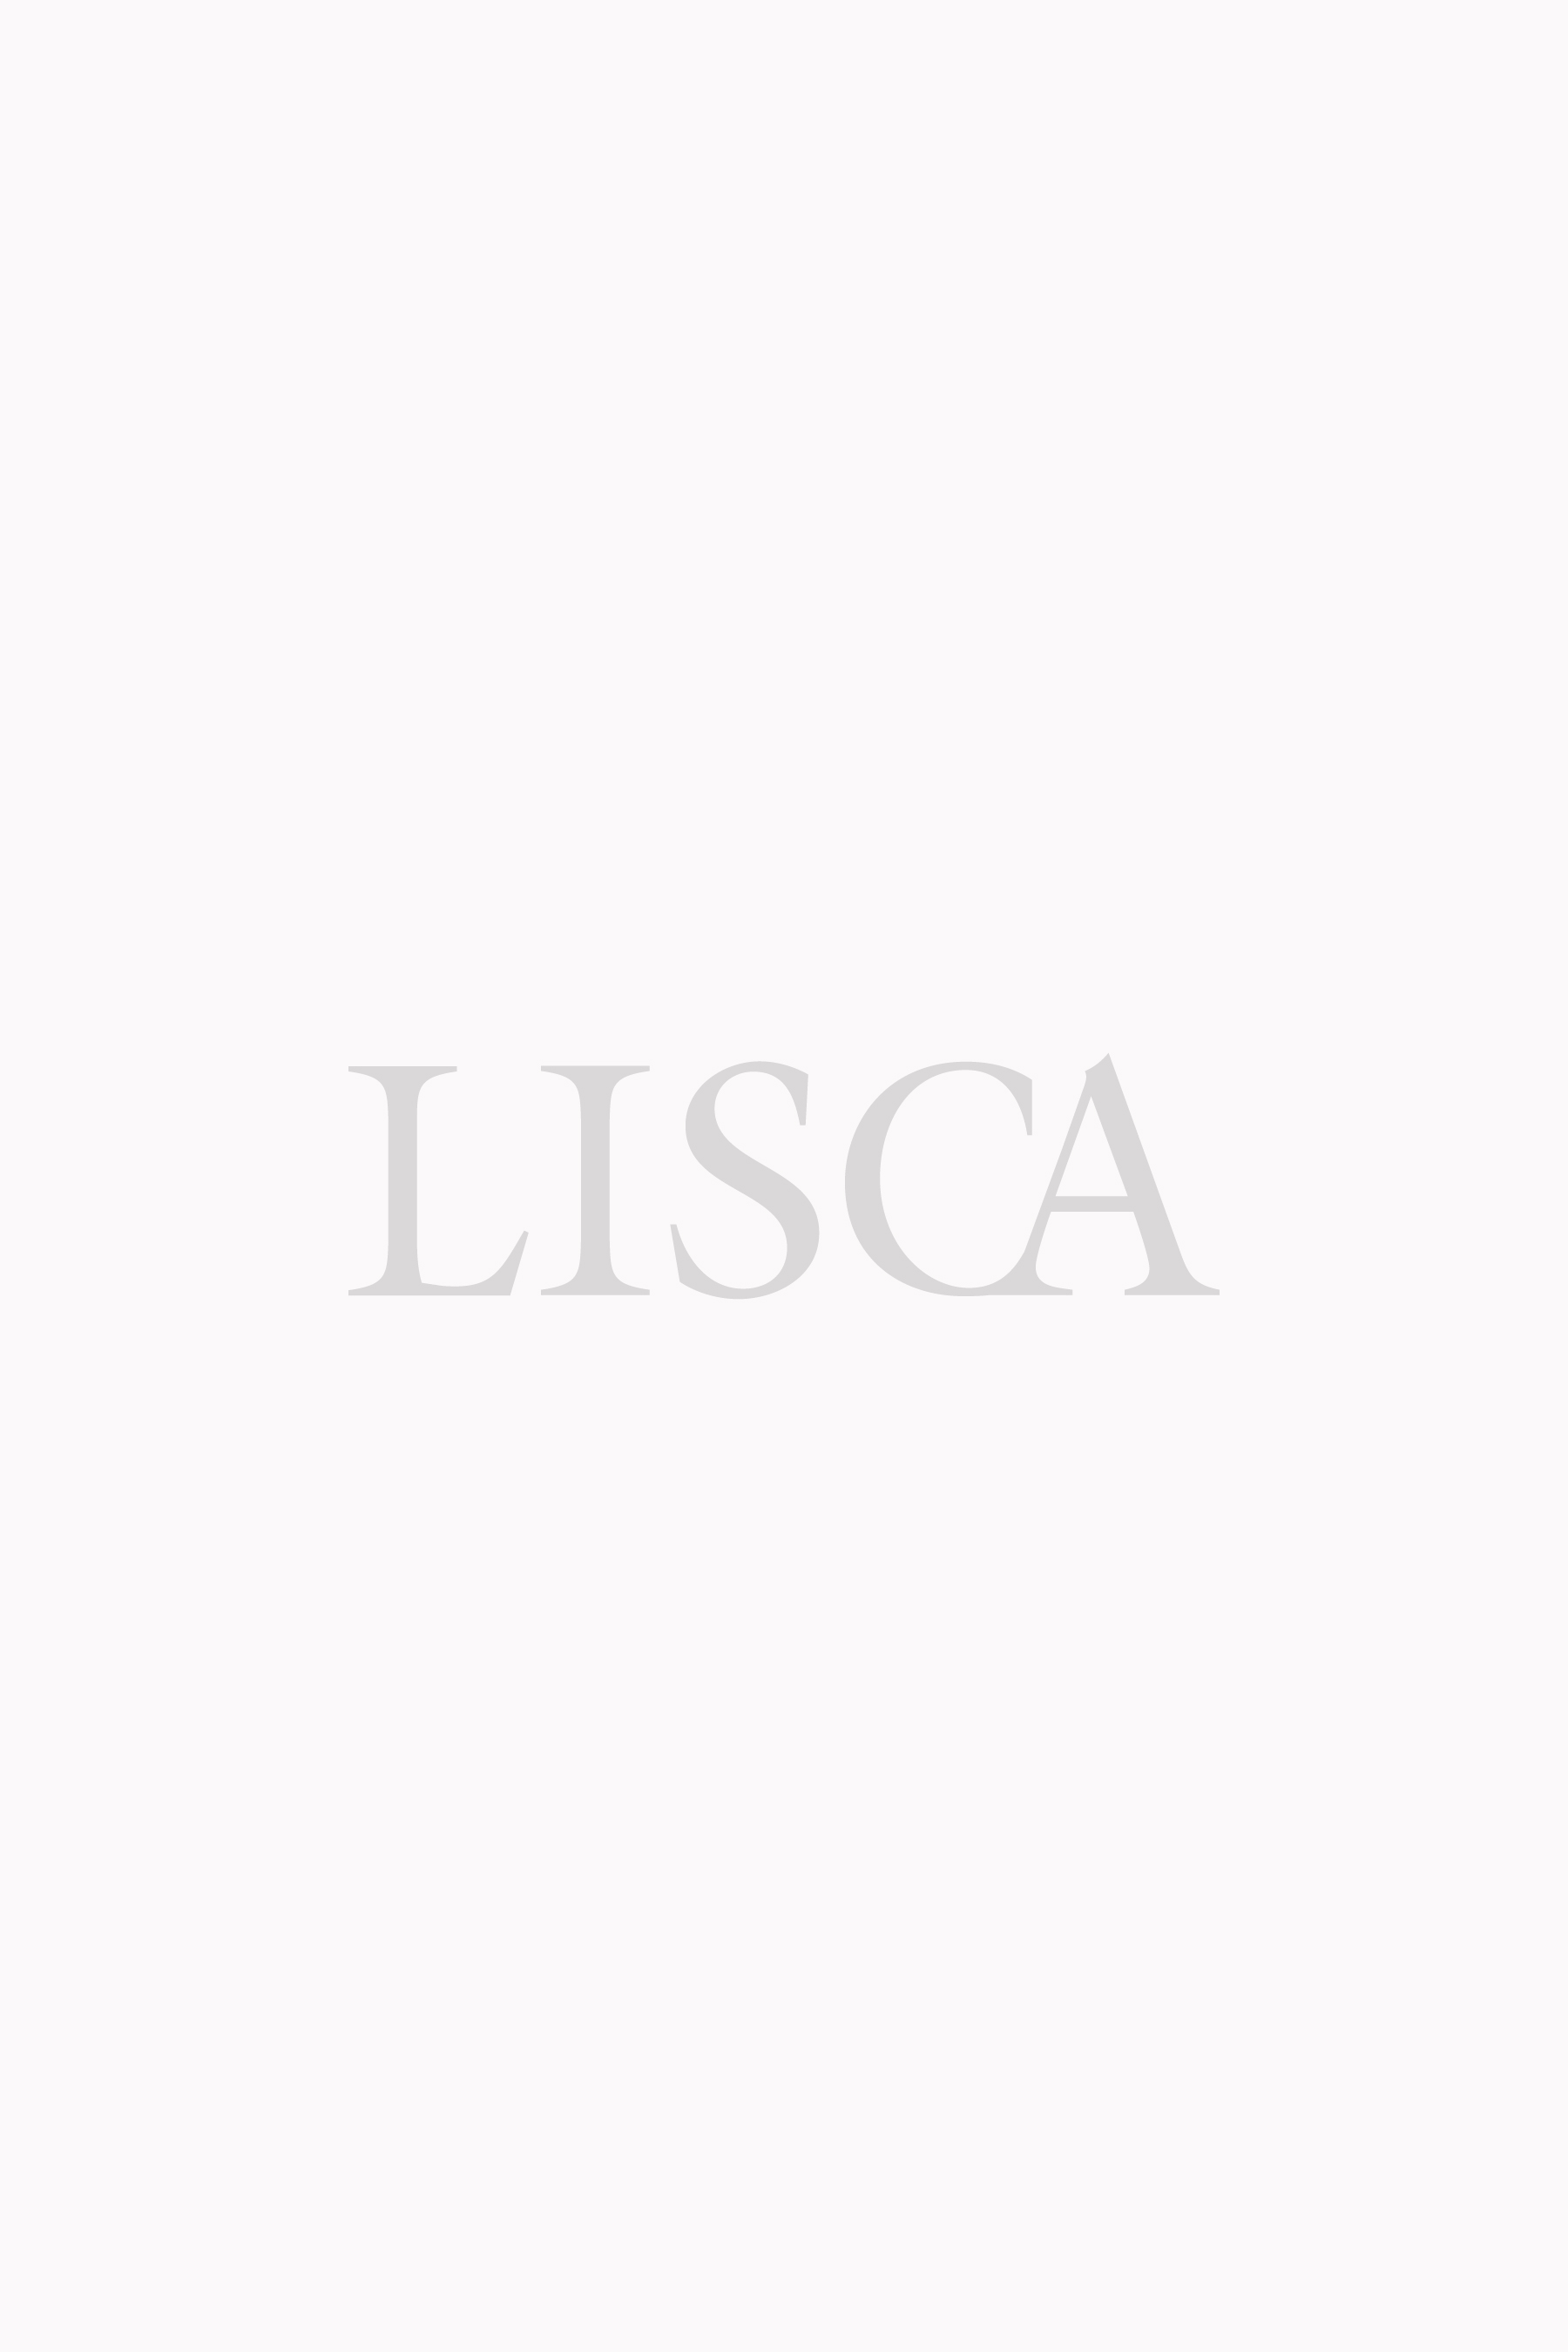 Gala Fashion Show - Lisca 2015